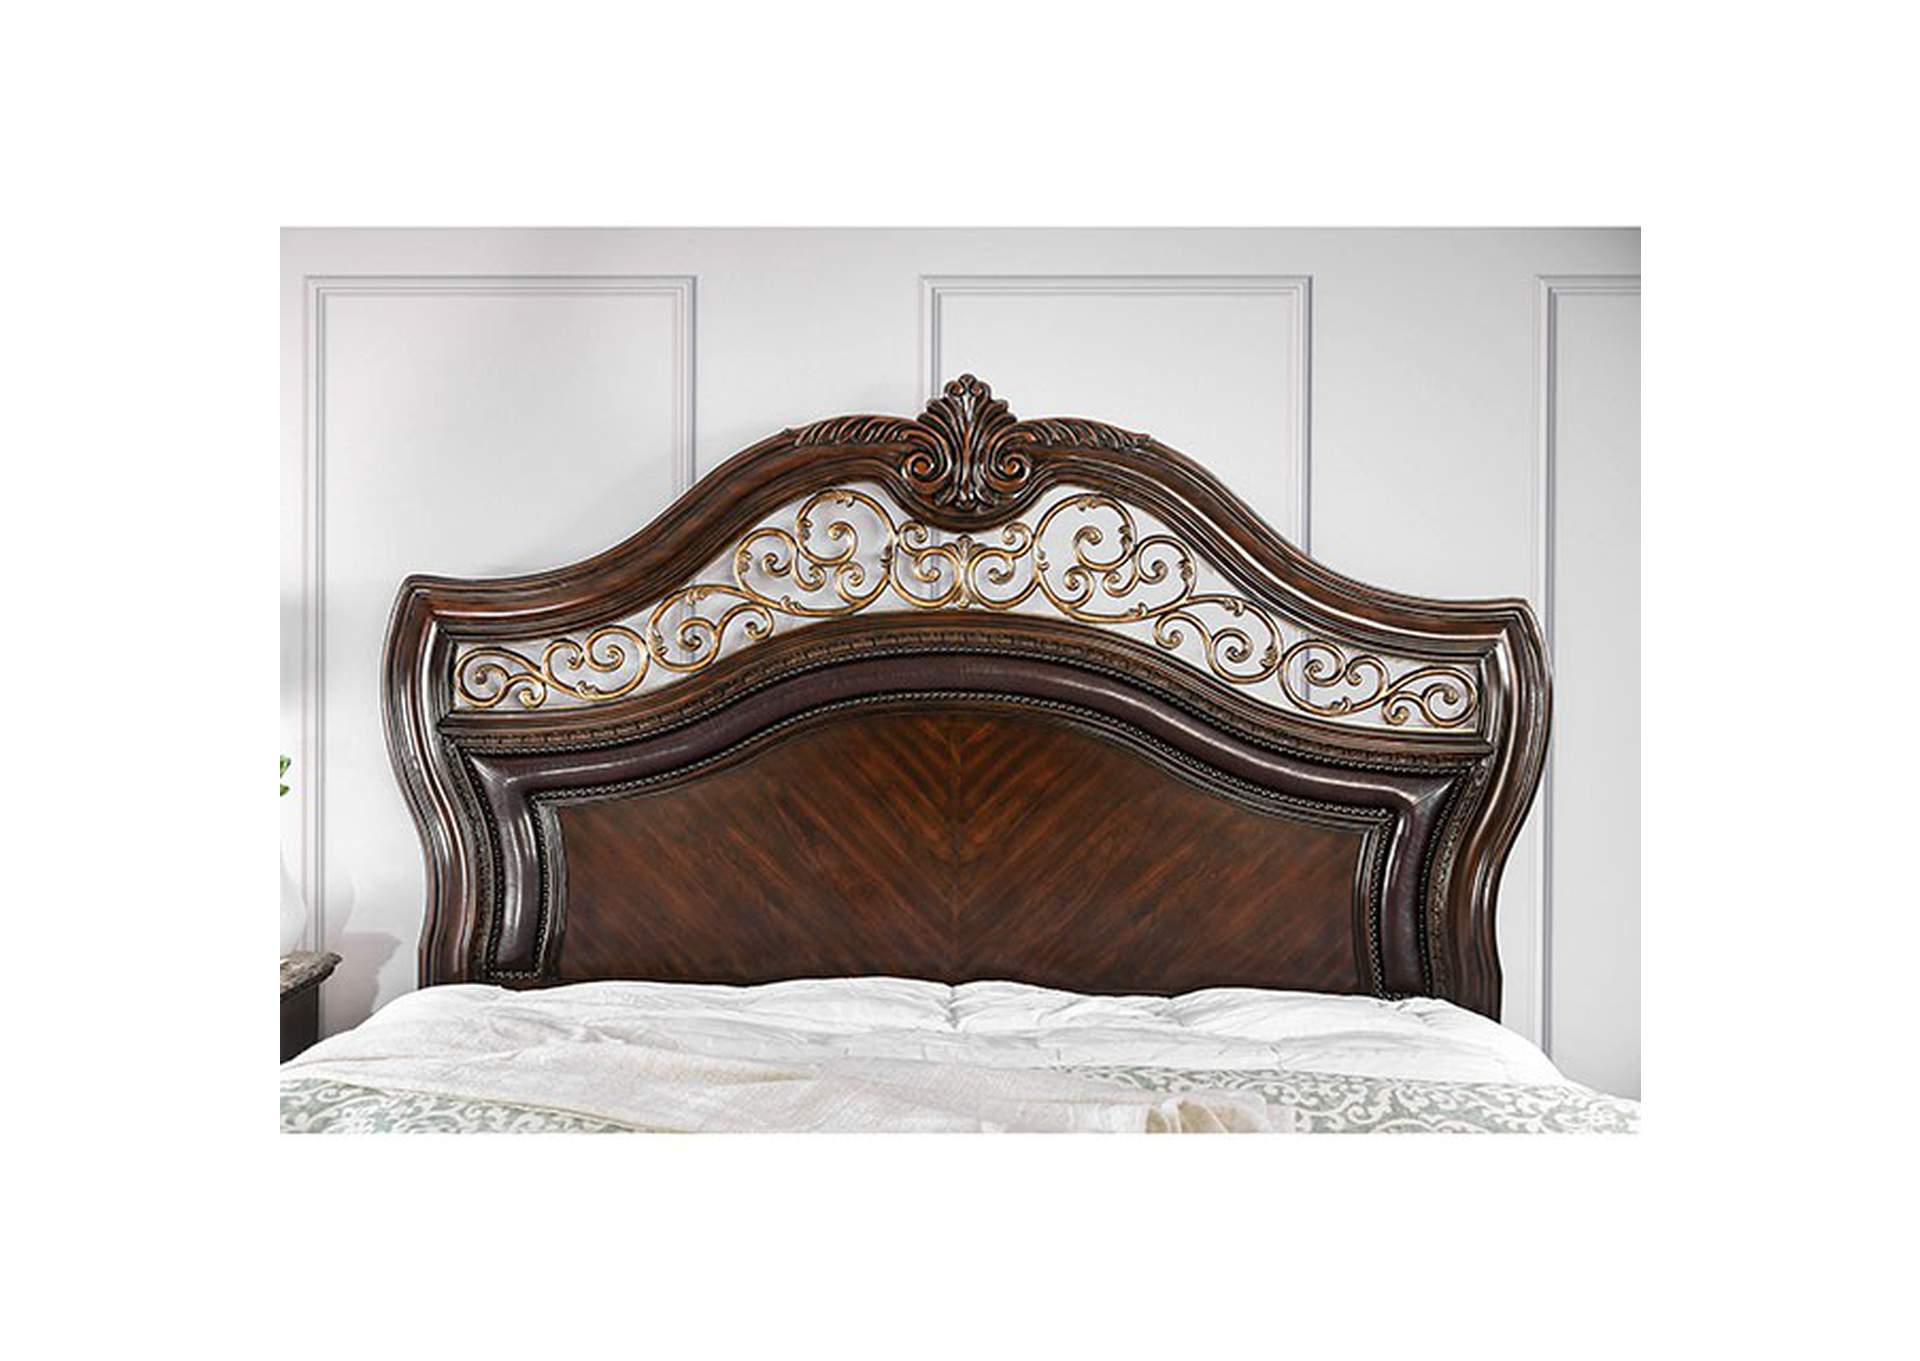 Menodora Queen Bed,Furniture of America